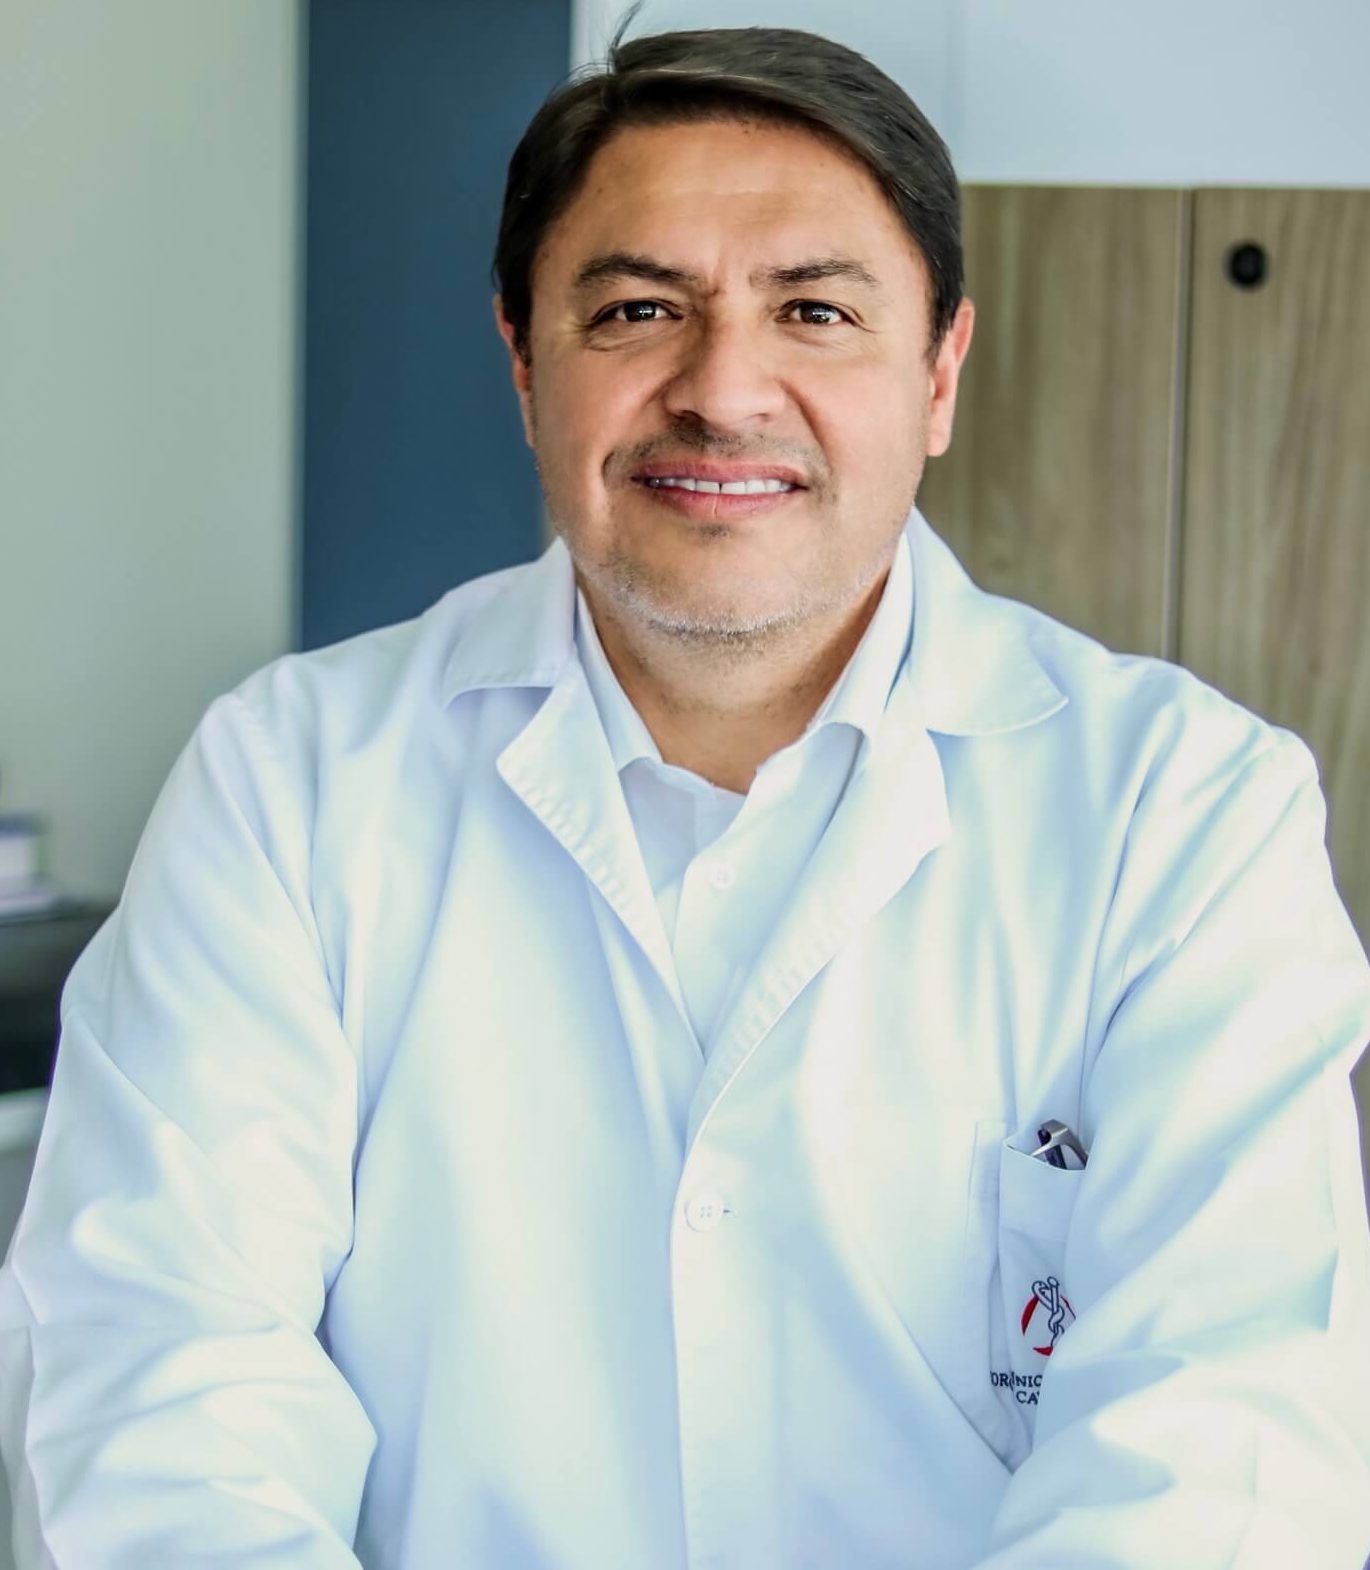 Dr Carlos Alfonso Velez Alvarez